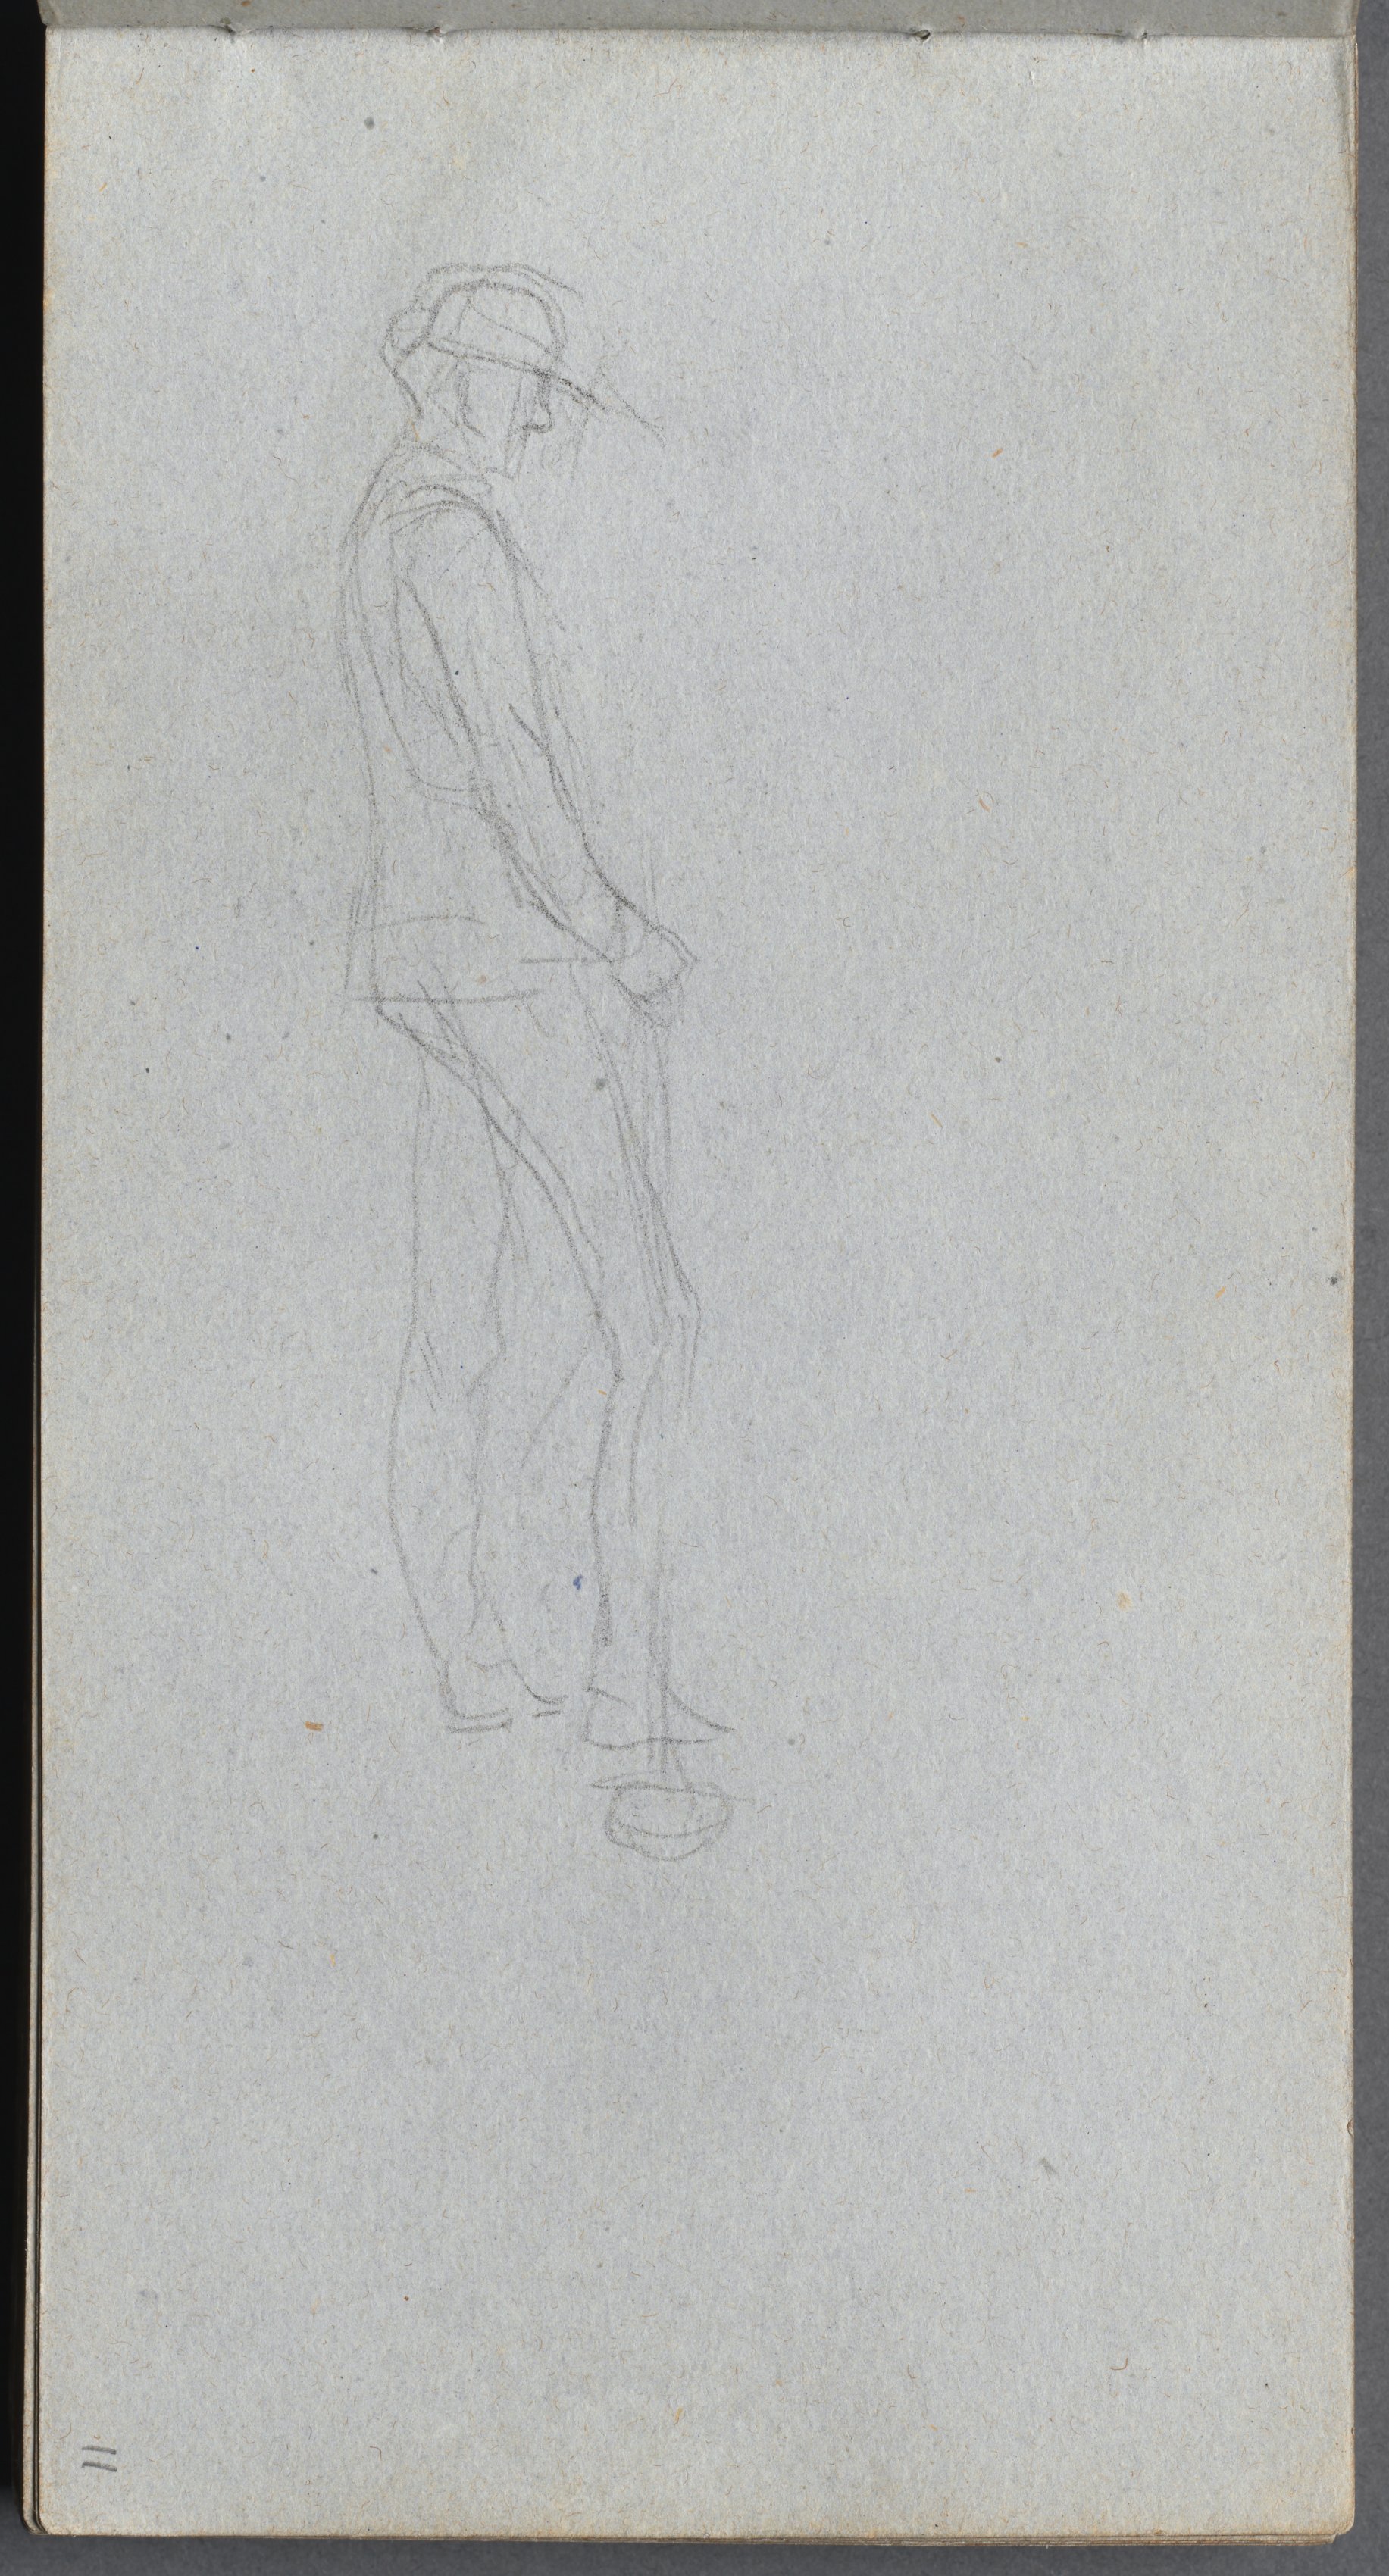 Sketchbook, page 11: Figure in Profile